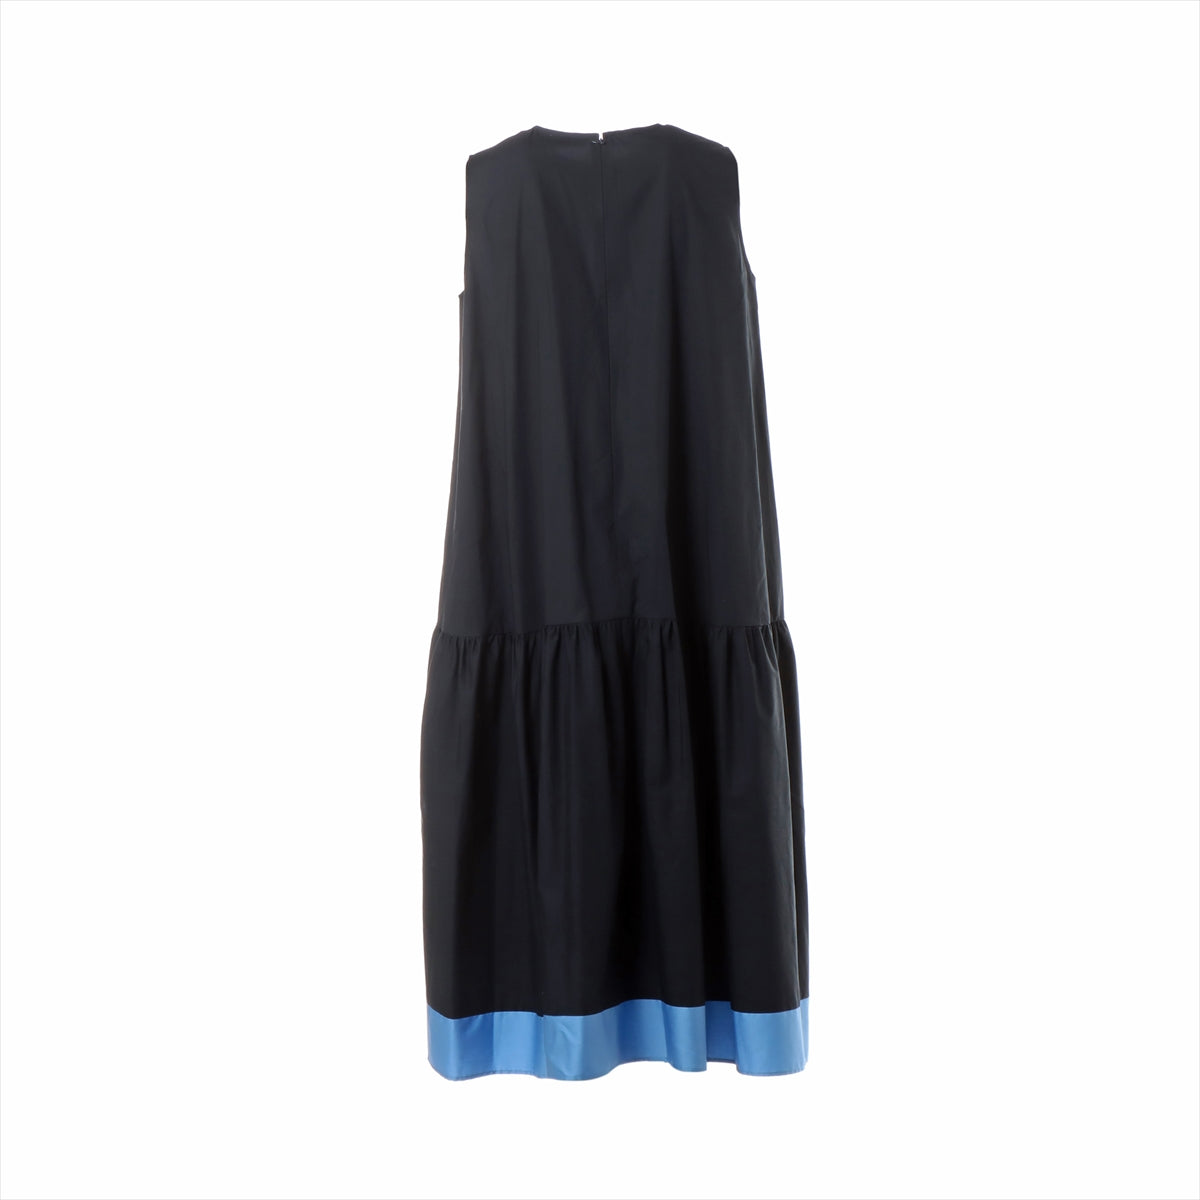 YOKO CHAN 21 years Cotton & polyurethane Sleeveless dress 38 Ladies' Black x blue  YCD-221-765